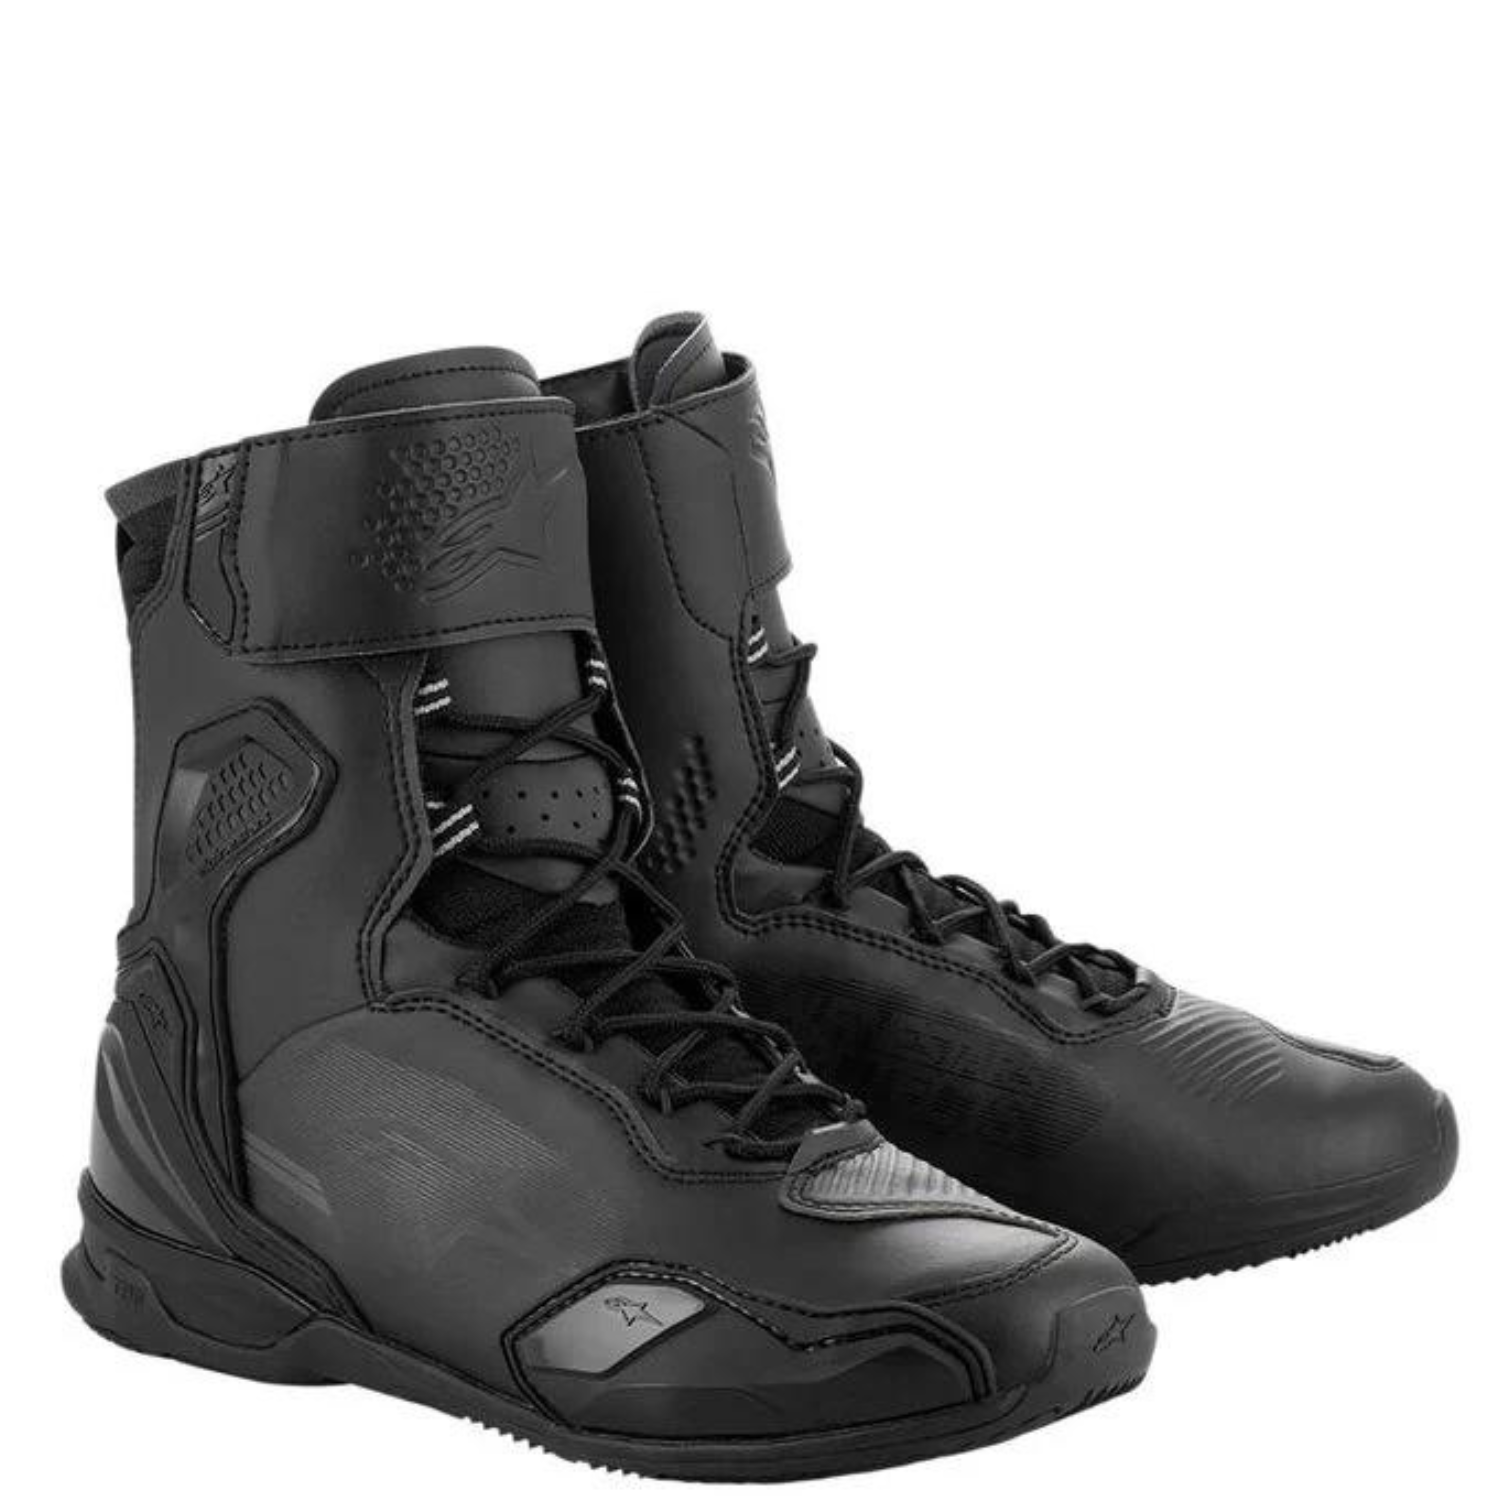 Image of Alpinestars Superfaster Shoes Black Size US 11 ID 8059347260679